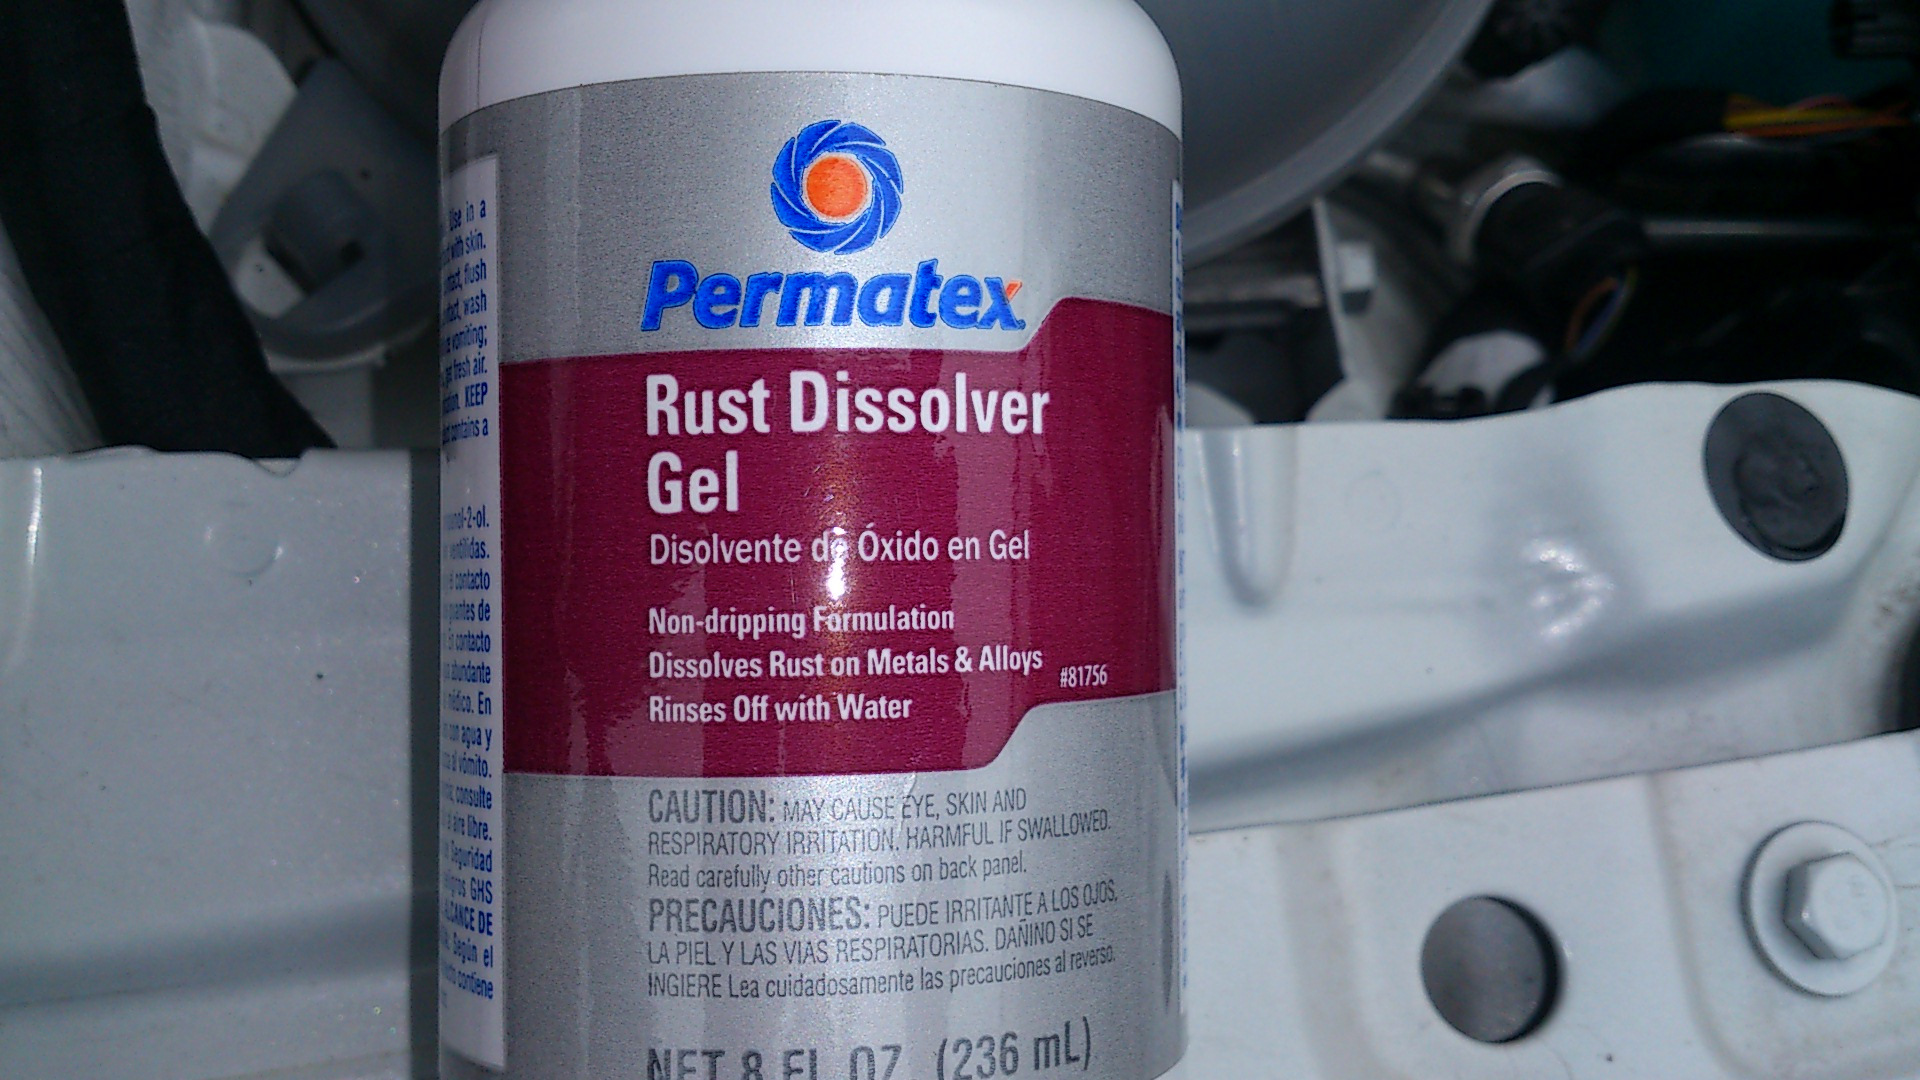 Permatex rust treatment аэрозоль фото 82